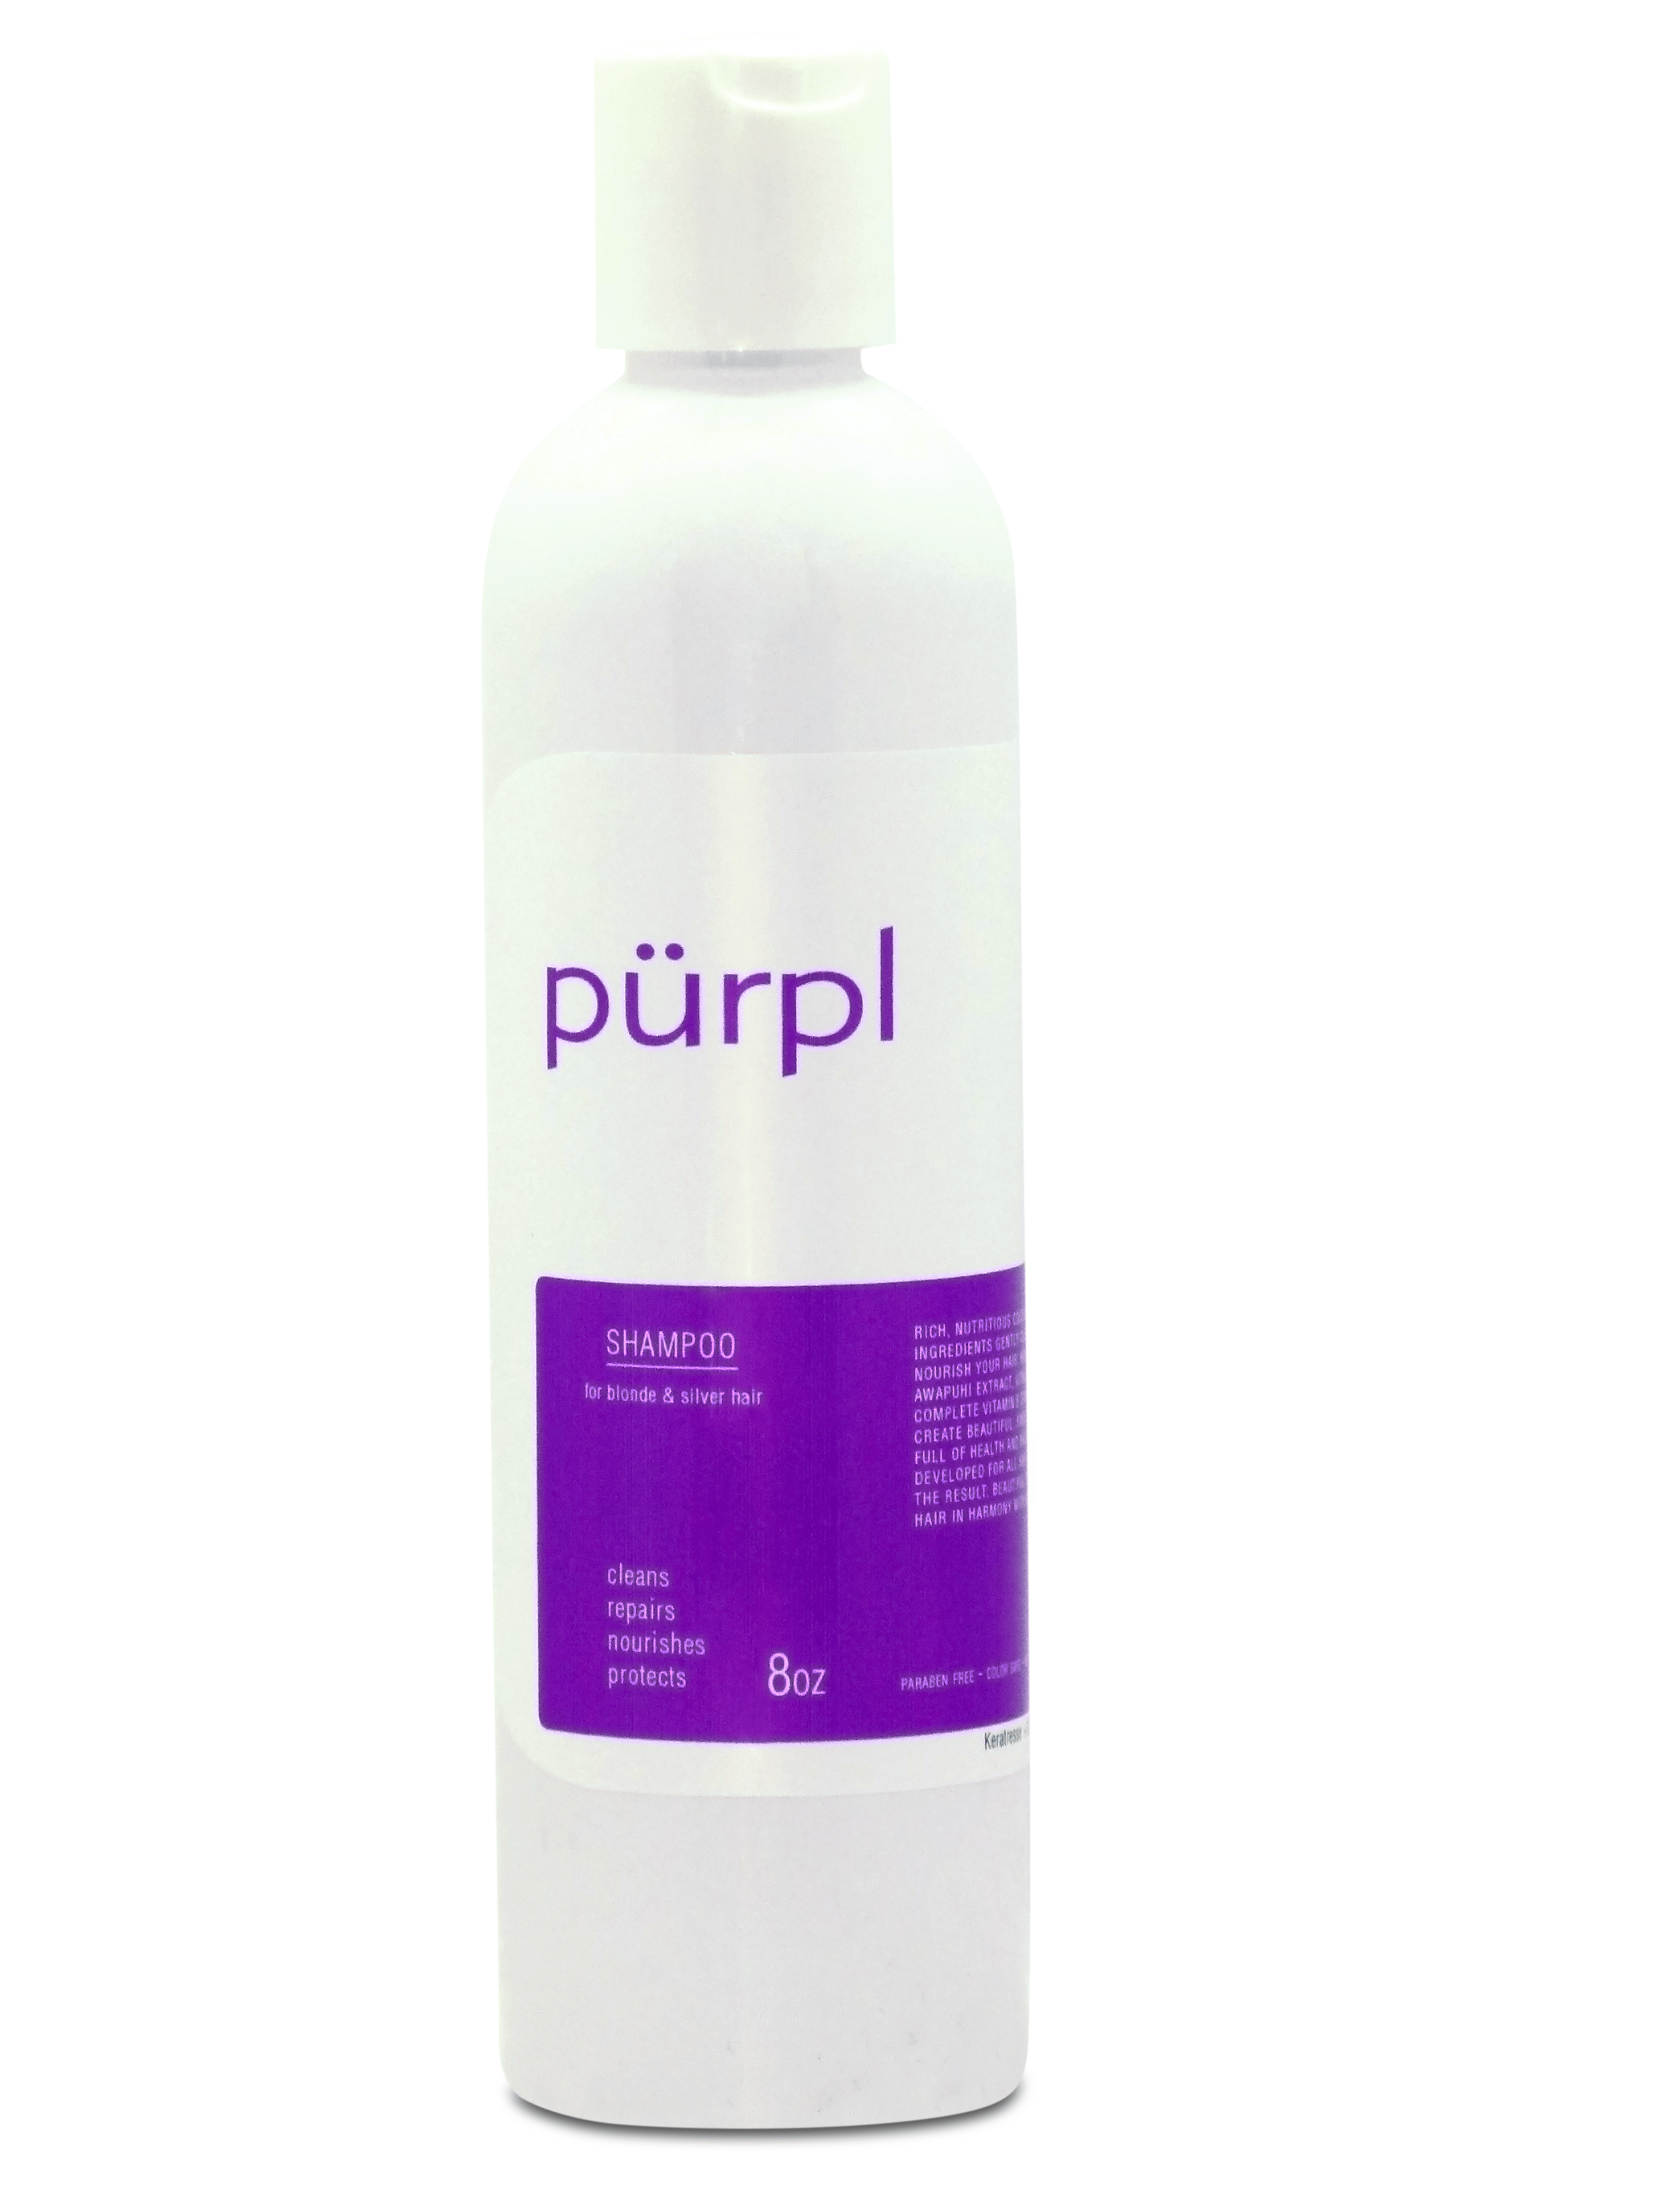 Purpl shampoo